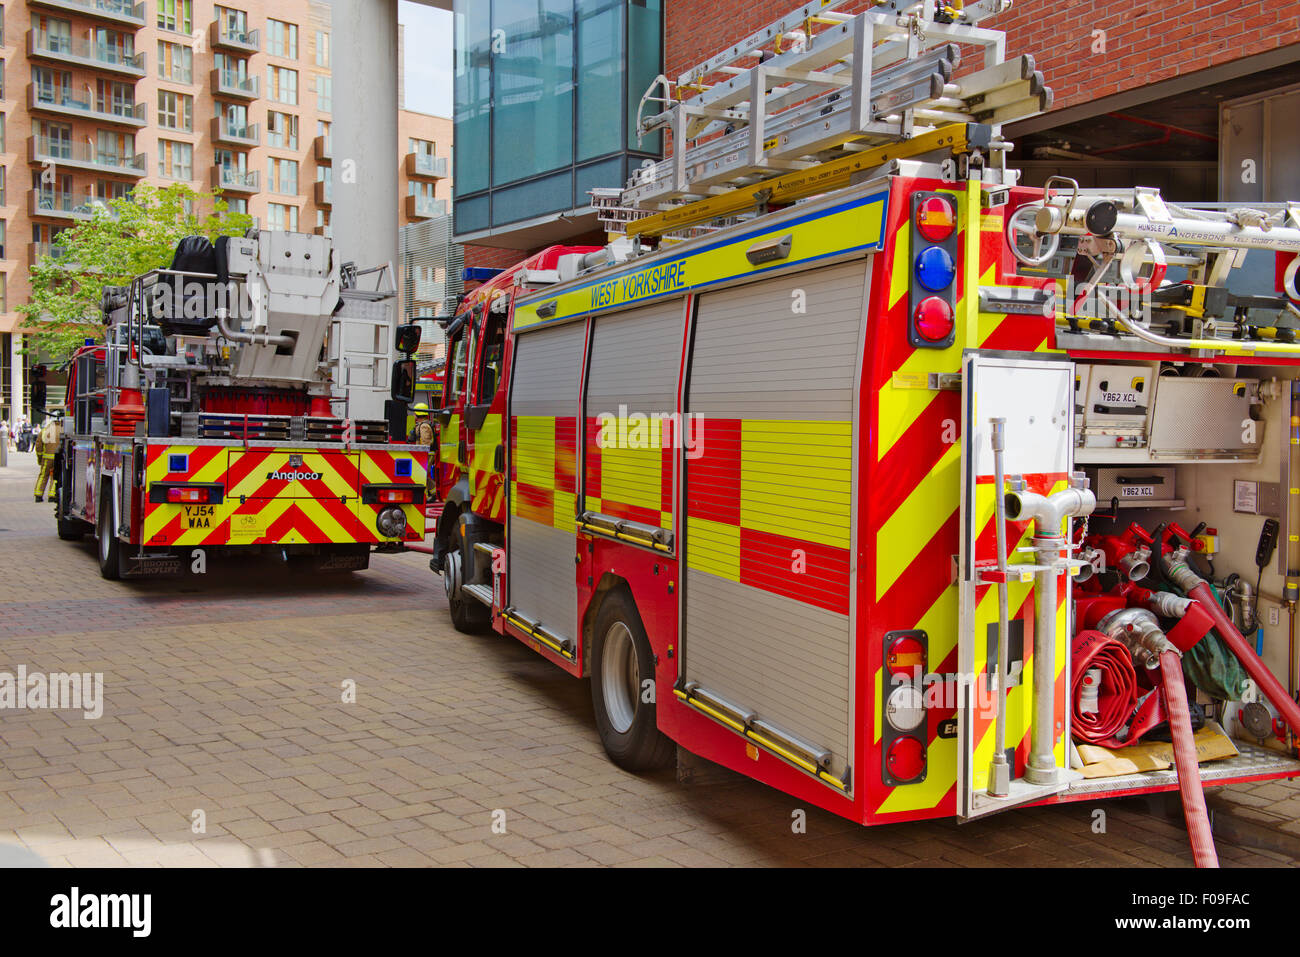 West Yorkshire fire Service-Motoren, die Teilnahme an Feuer in Leeds Stockfoto